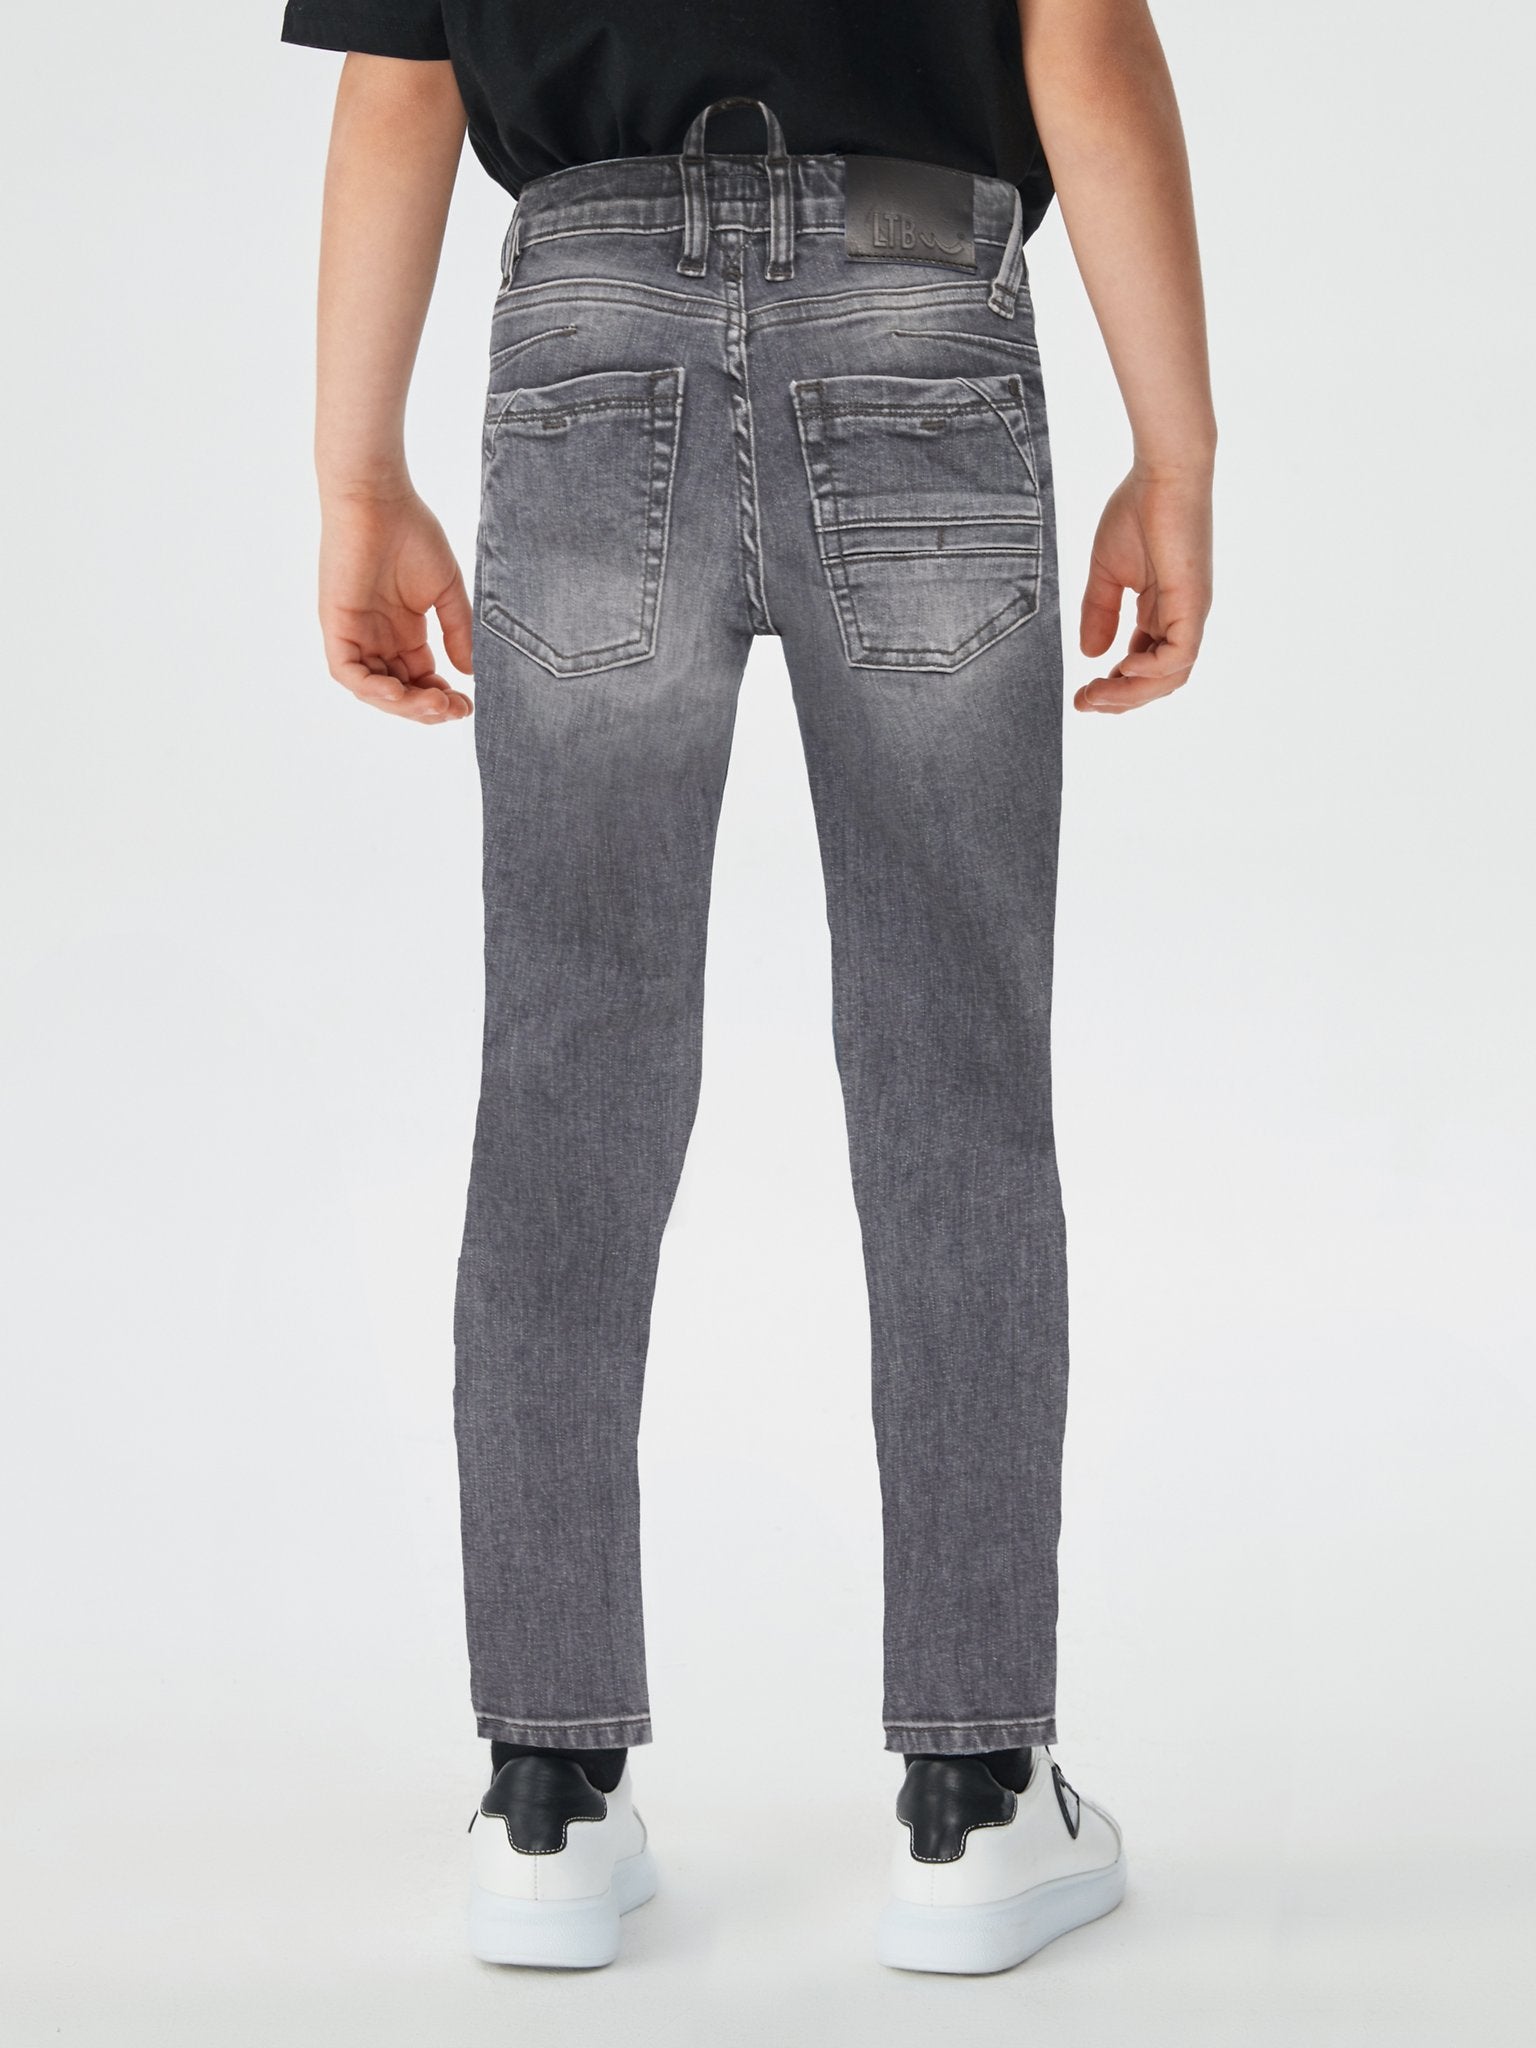 Jongens Jeans CAYLE BCALI UNDAMAGED WASH van LTB in de kleur CALI UNDAMAGED WASH in maat 176.